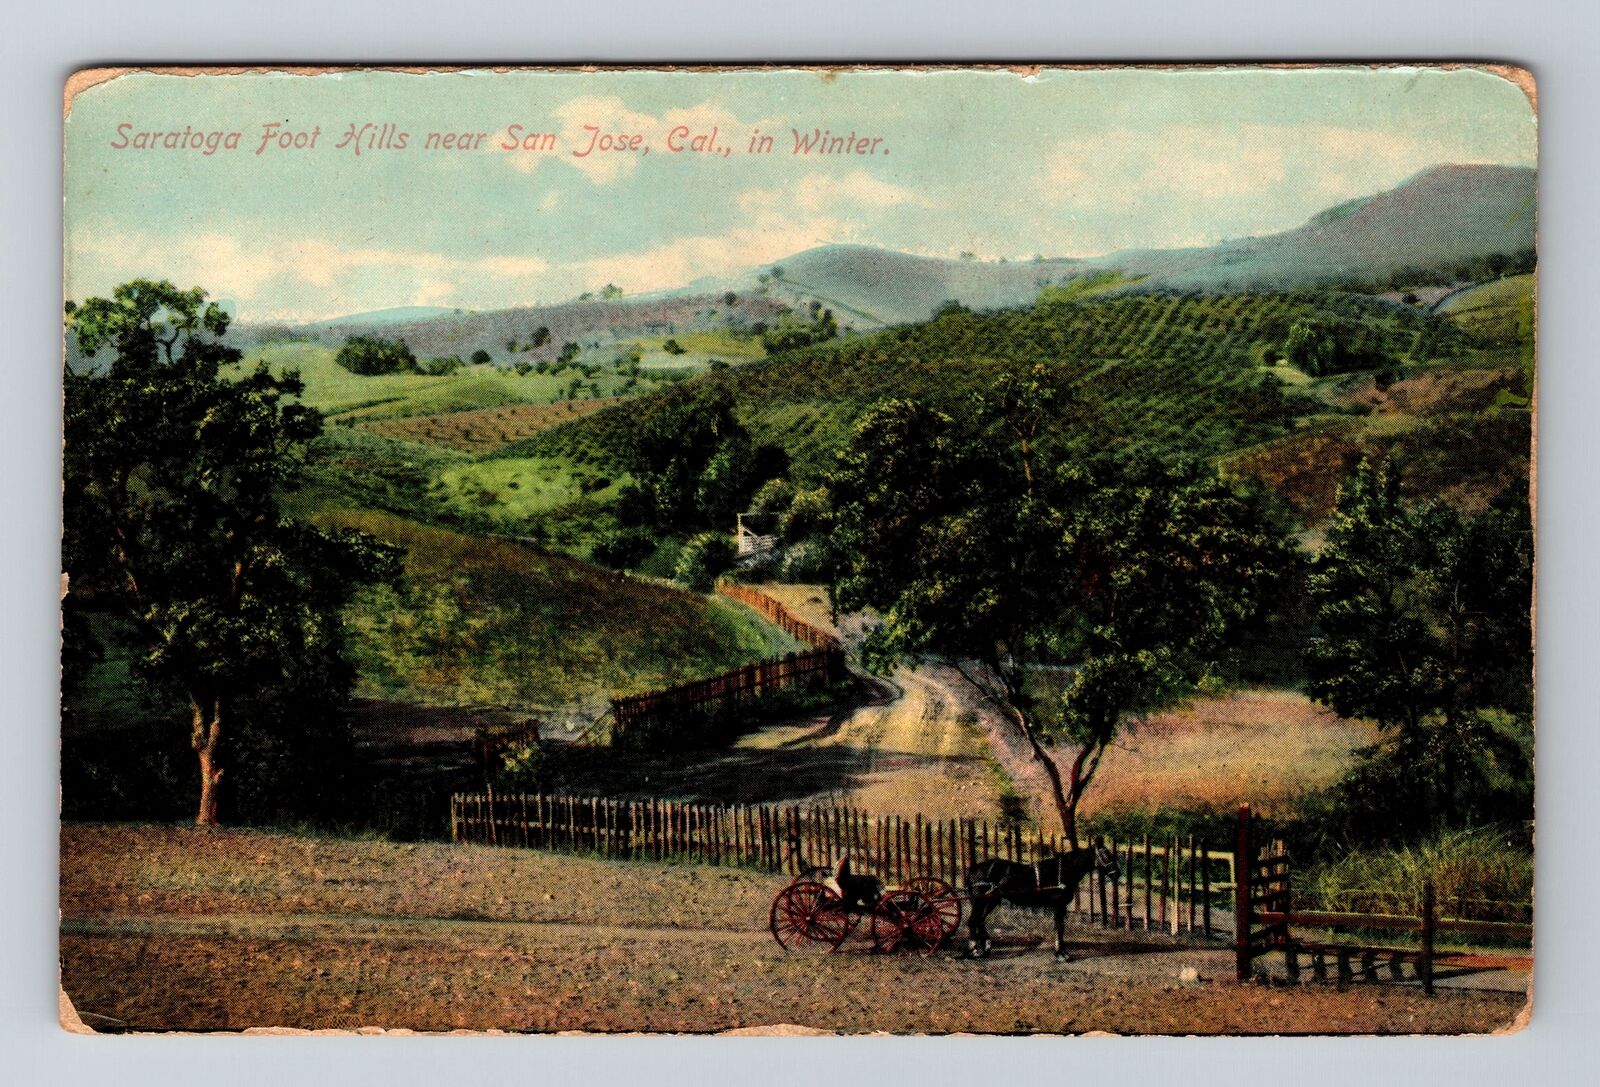 San Jose CA-California, Saratoga Foot Hills, Antique Vintage Souvenir Postcard